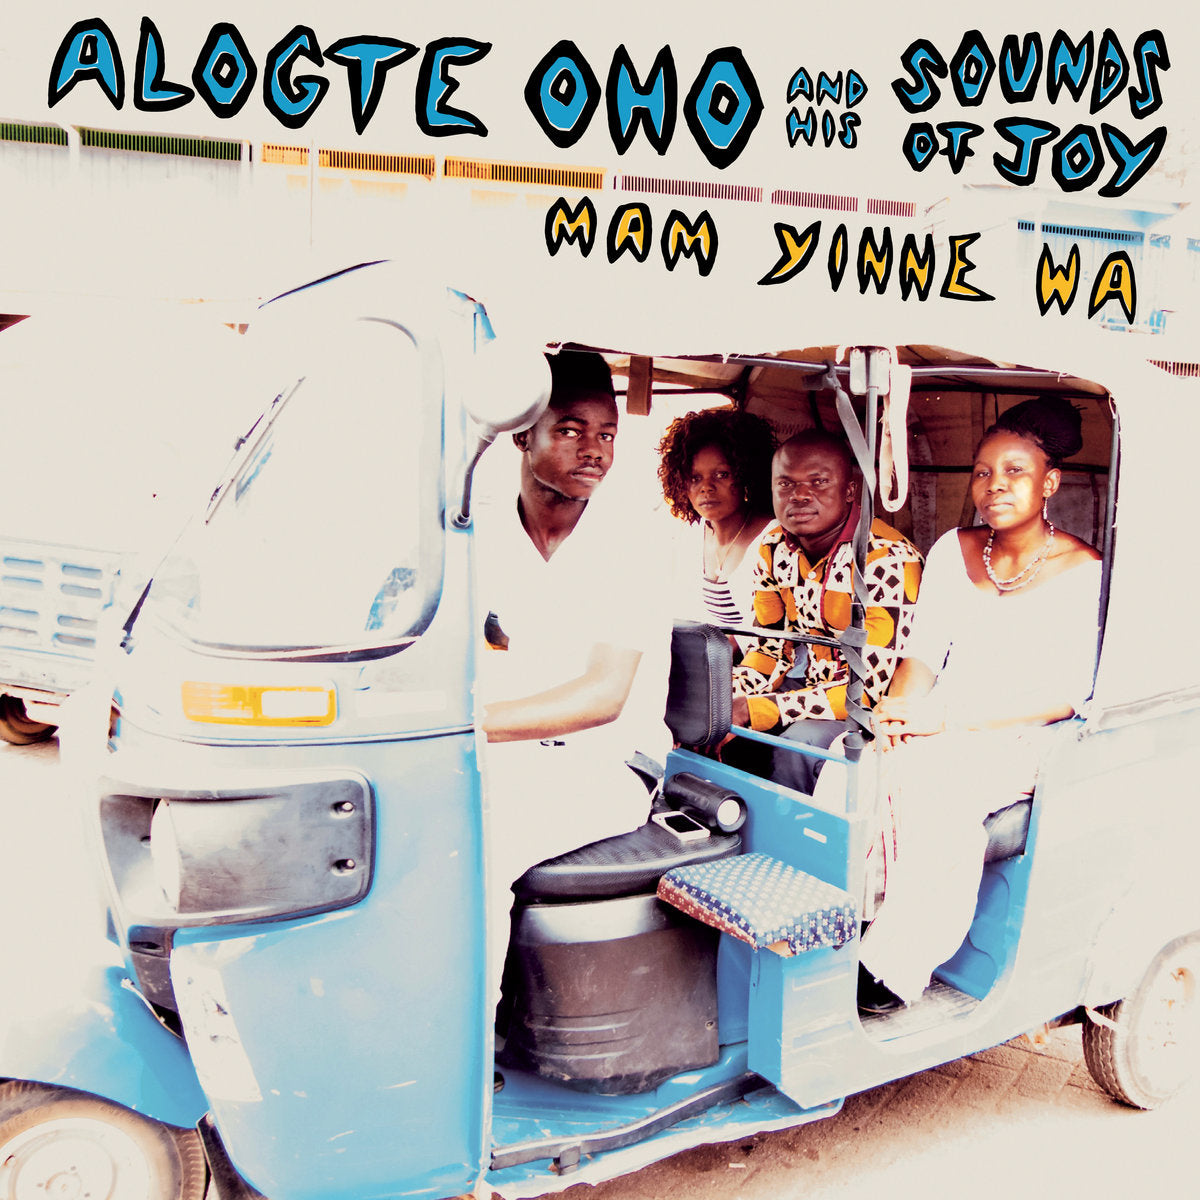 ALOGTE OHO & His Sounds of Joy - Mam Yinne Wa